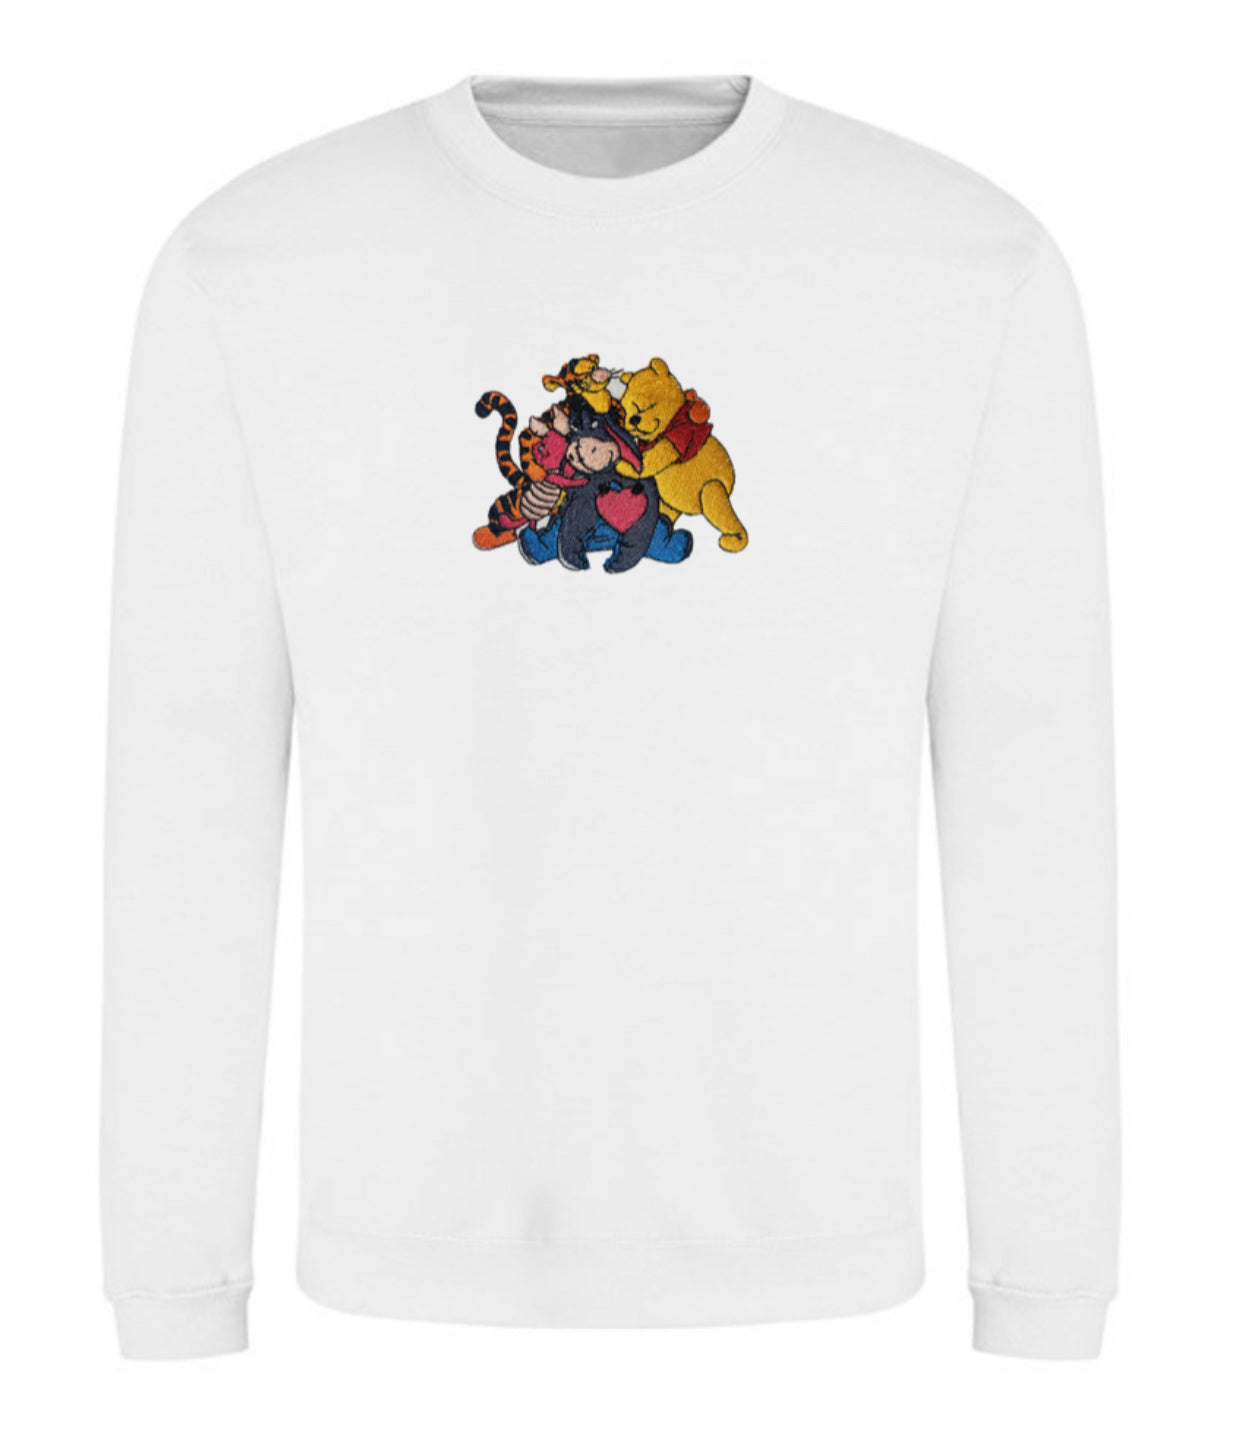 Winnie The Pooh & Friends White Sweatshirt For Adults & Children